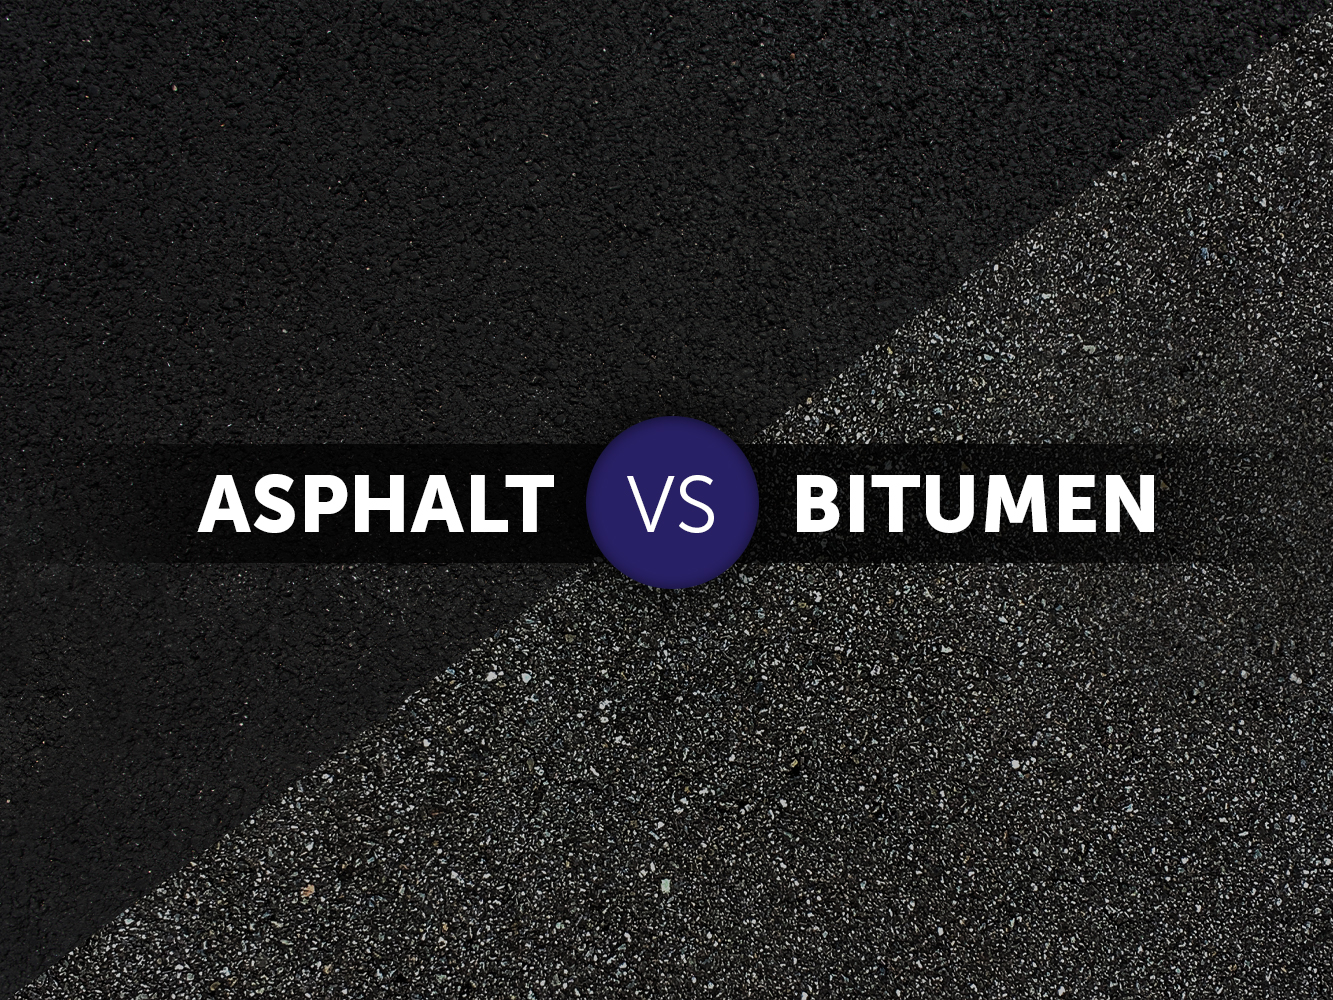 Asphalt vs Bitumen, What's The Difference?